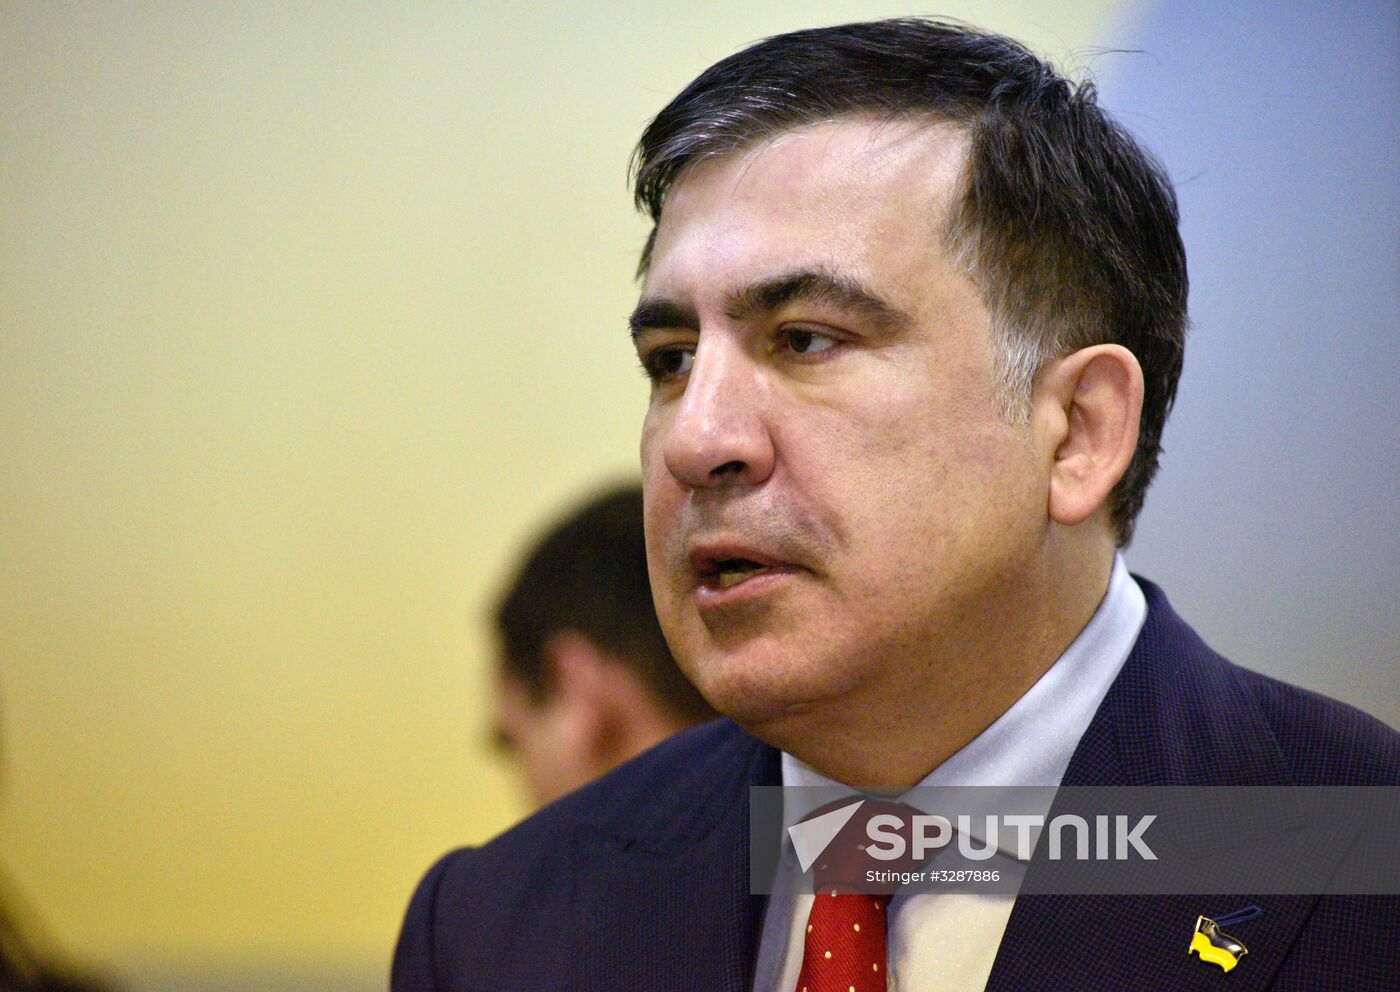 Trial of Mikheil Saakashvili in Kiev